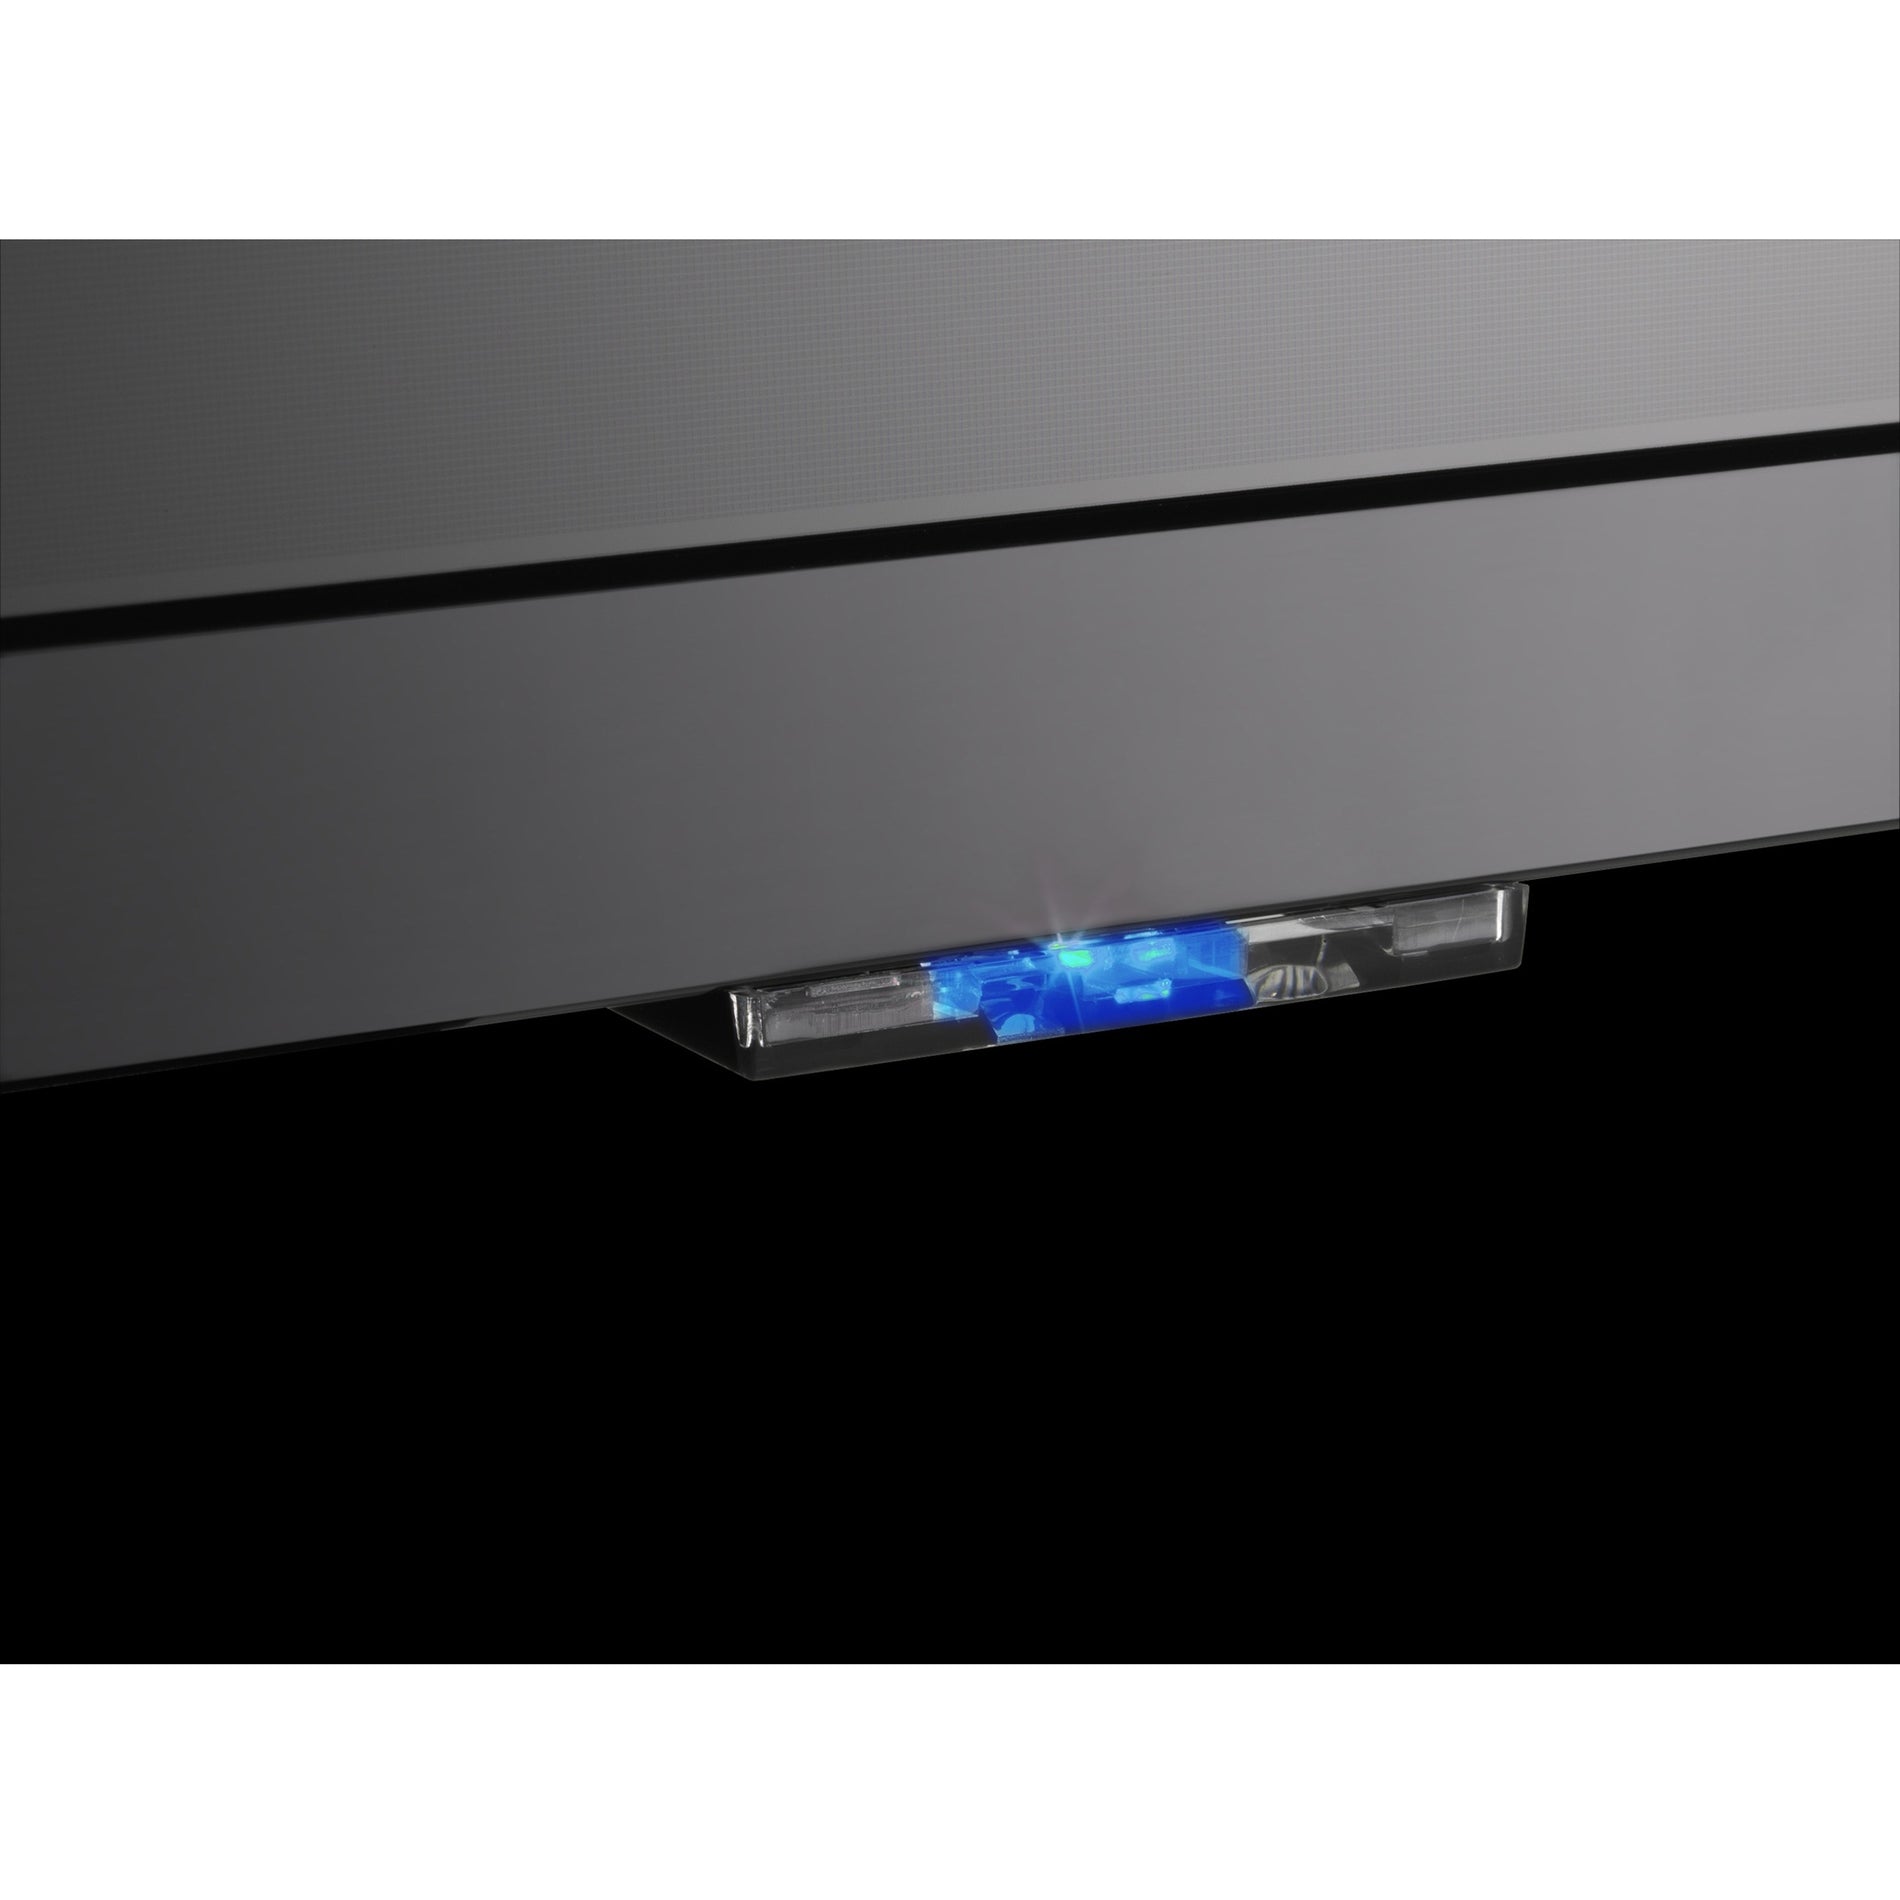 NEC Display E658 65" 4K UHD Display with Integrated ATSC/NTSC Tuner, High Dynamic Range (HDR), Energy Star